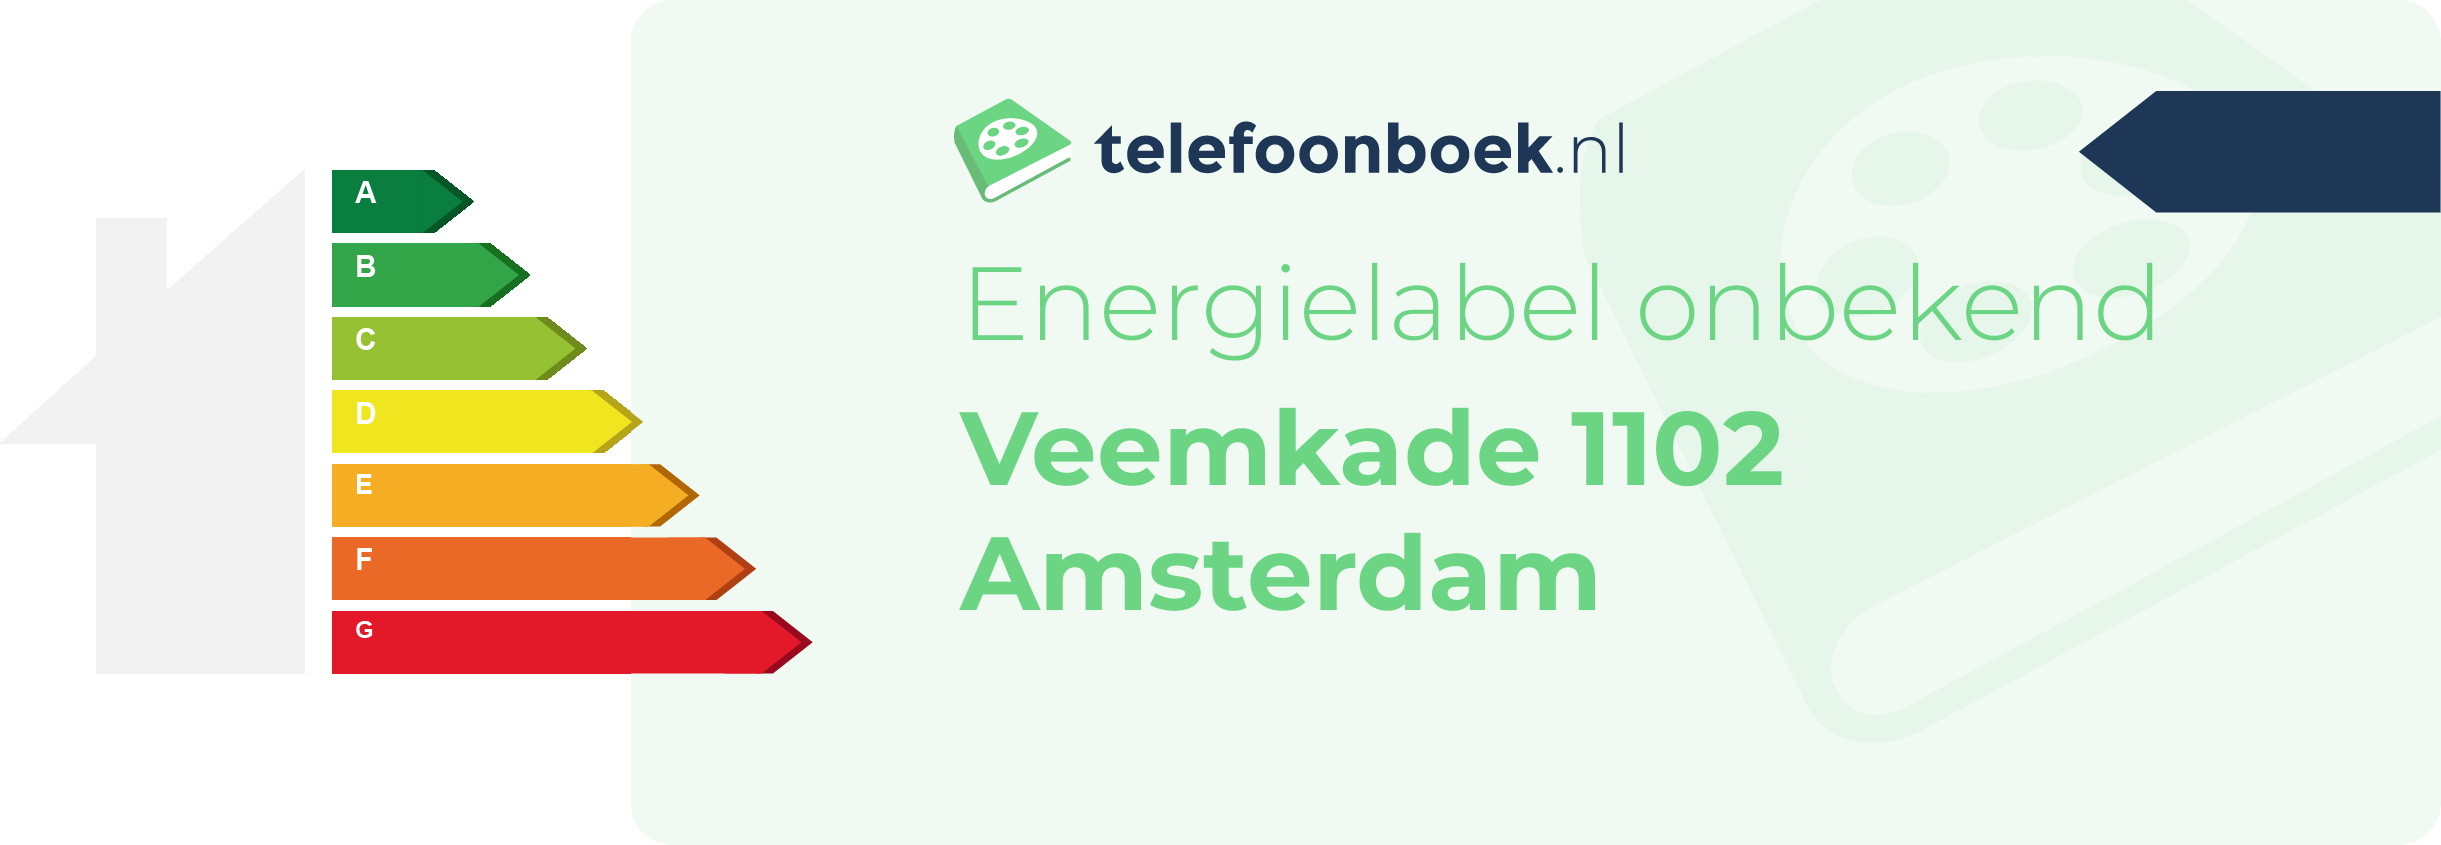 Energielabel Veemkade 1102 Amsterdam